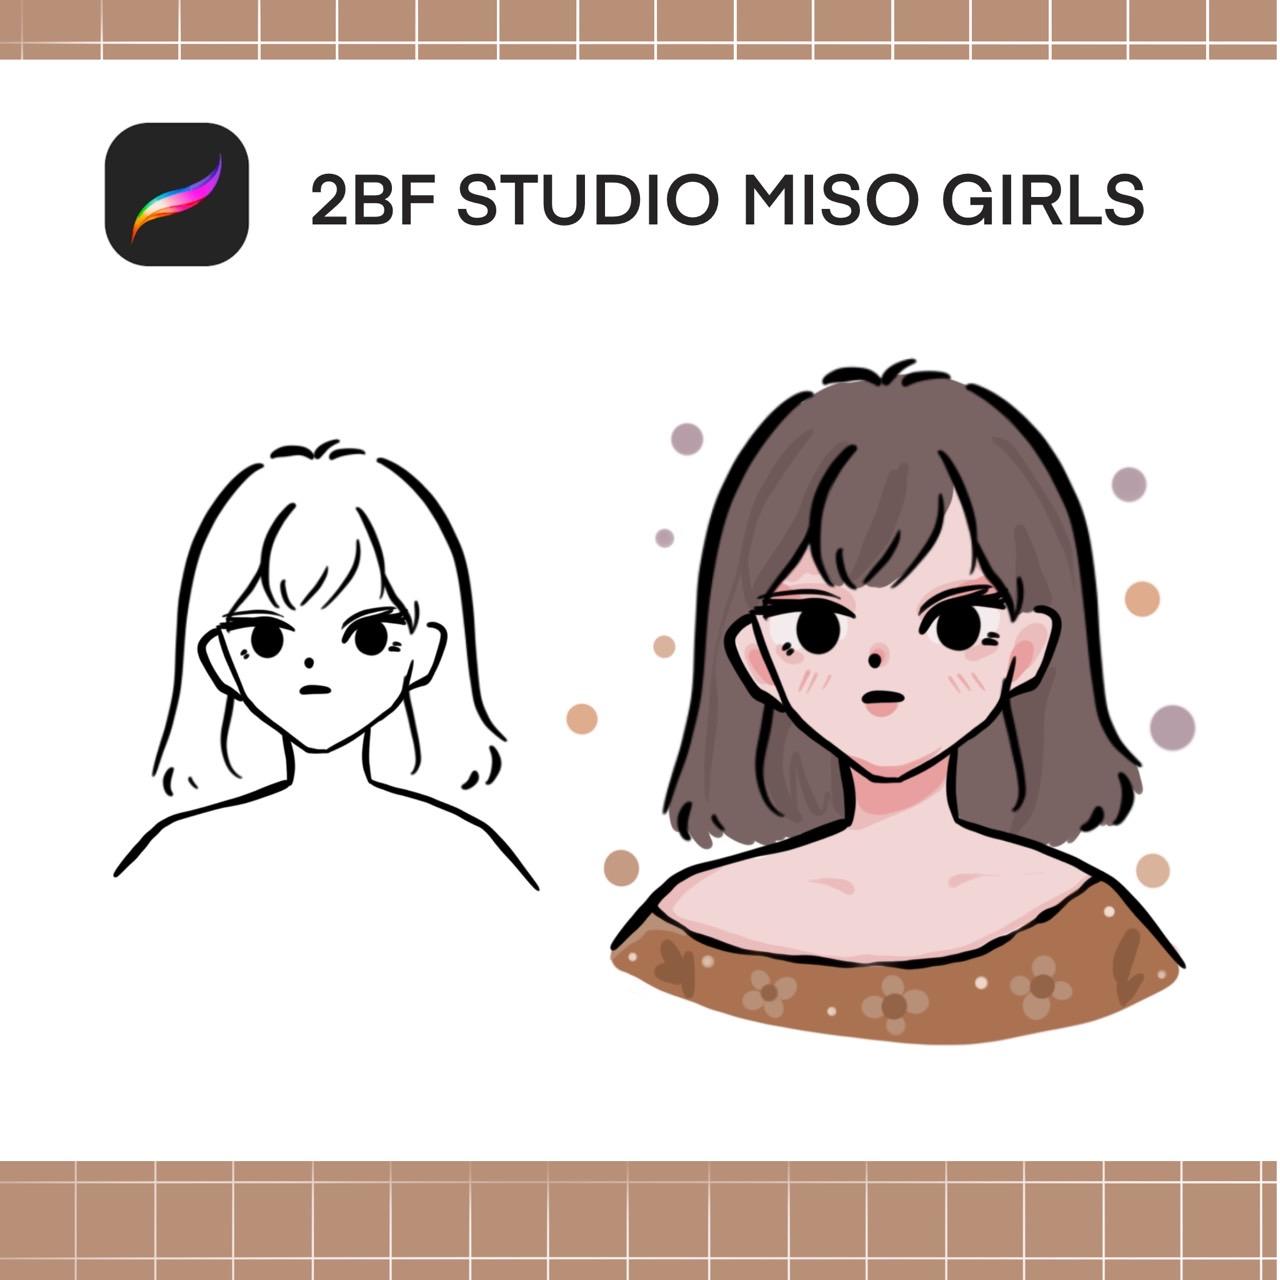 2BF STUDIO MISO GIRLS